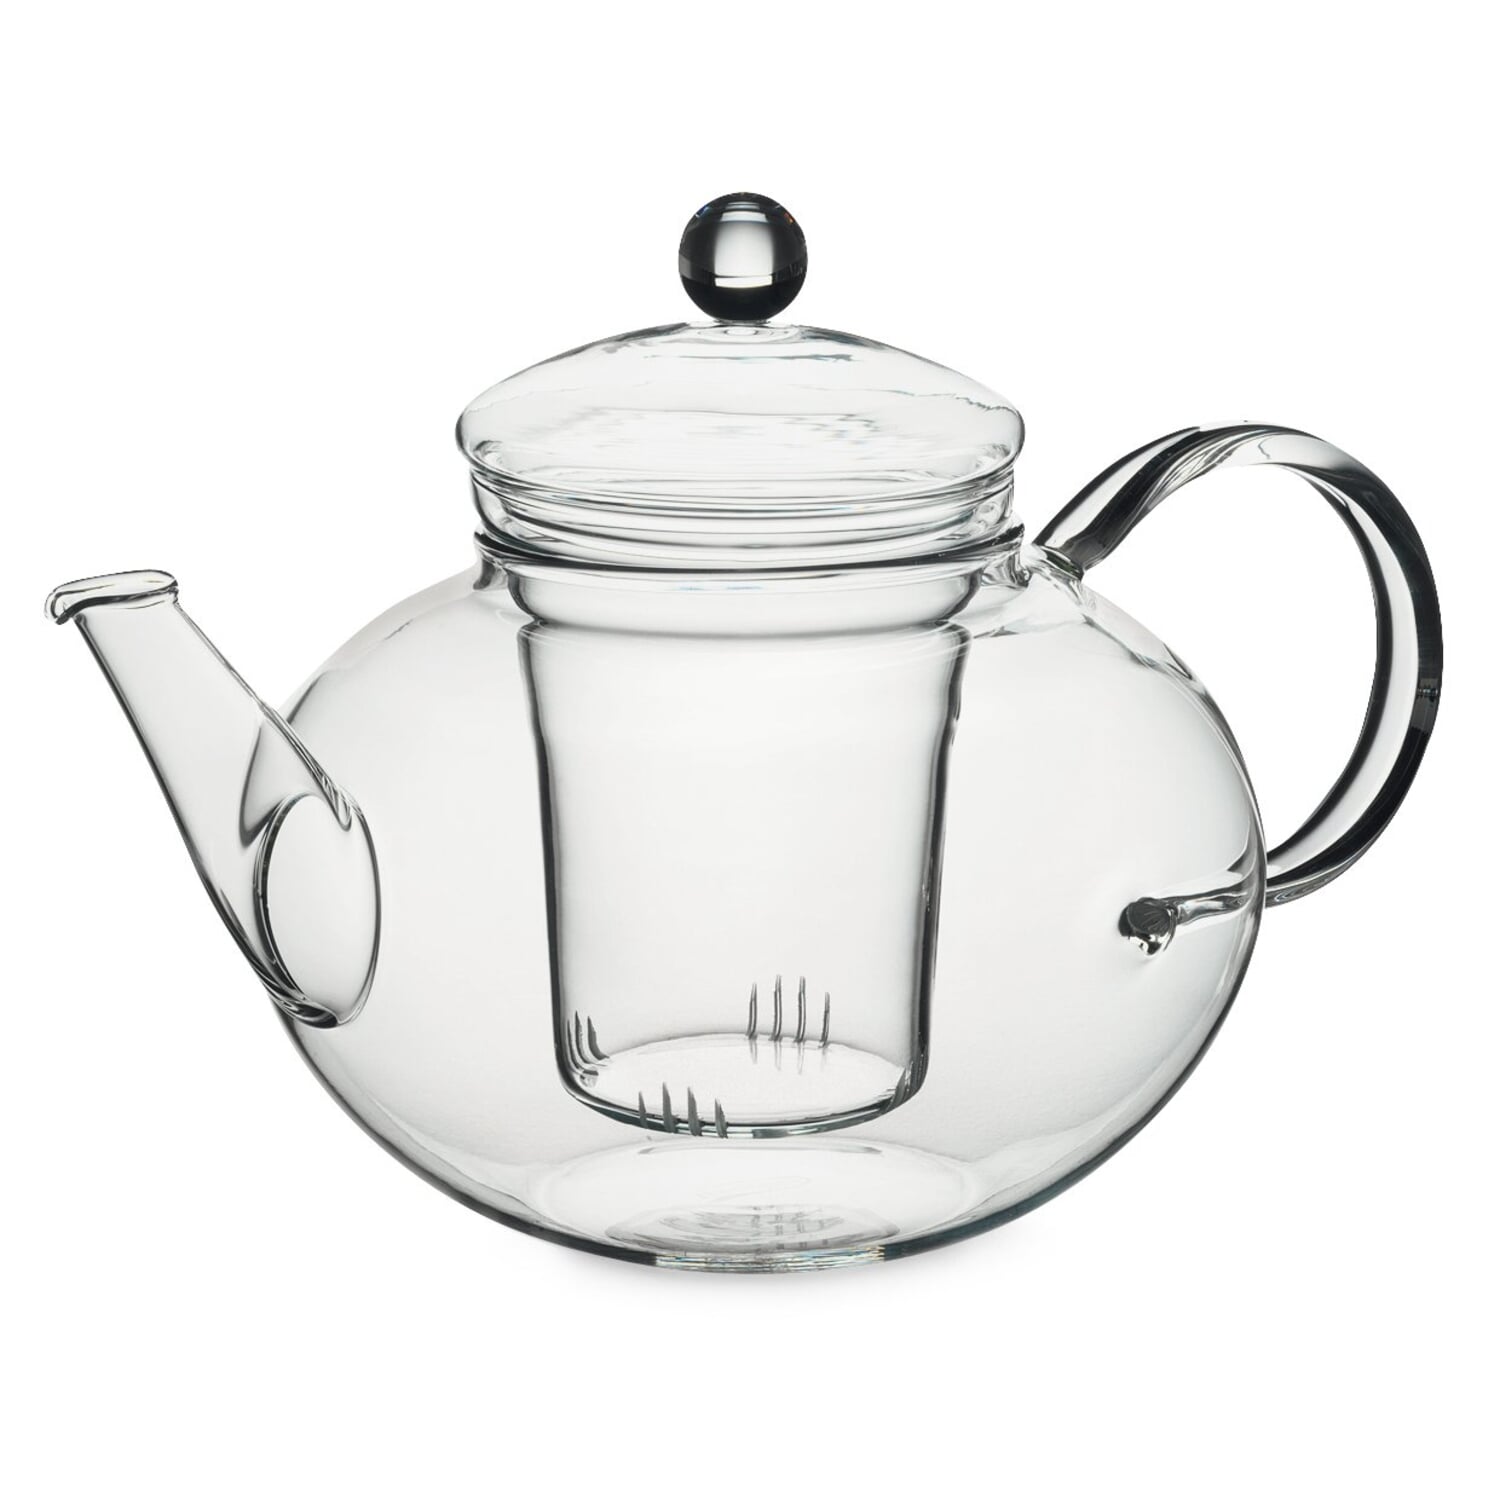 https://assets.manufactum.de/p/081/081466/81466_01.jpg/teapot-borosilicate-glass.jpg?profile=pdsmain_1500